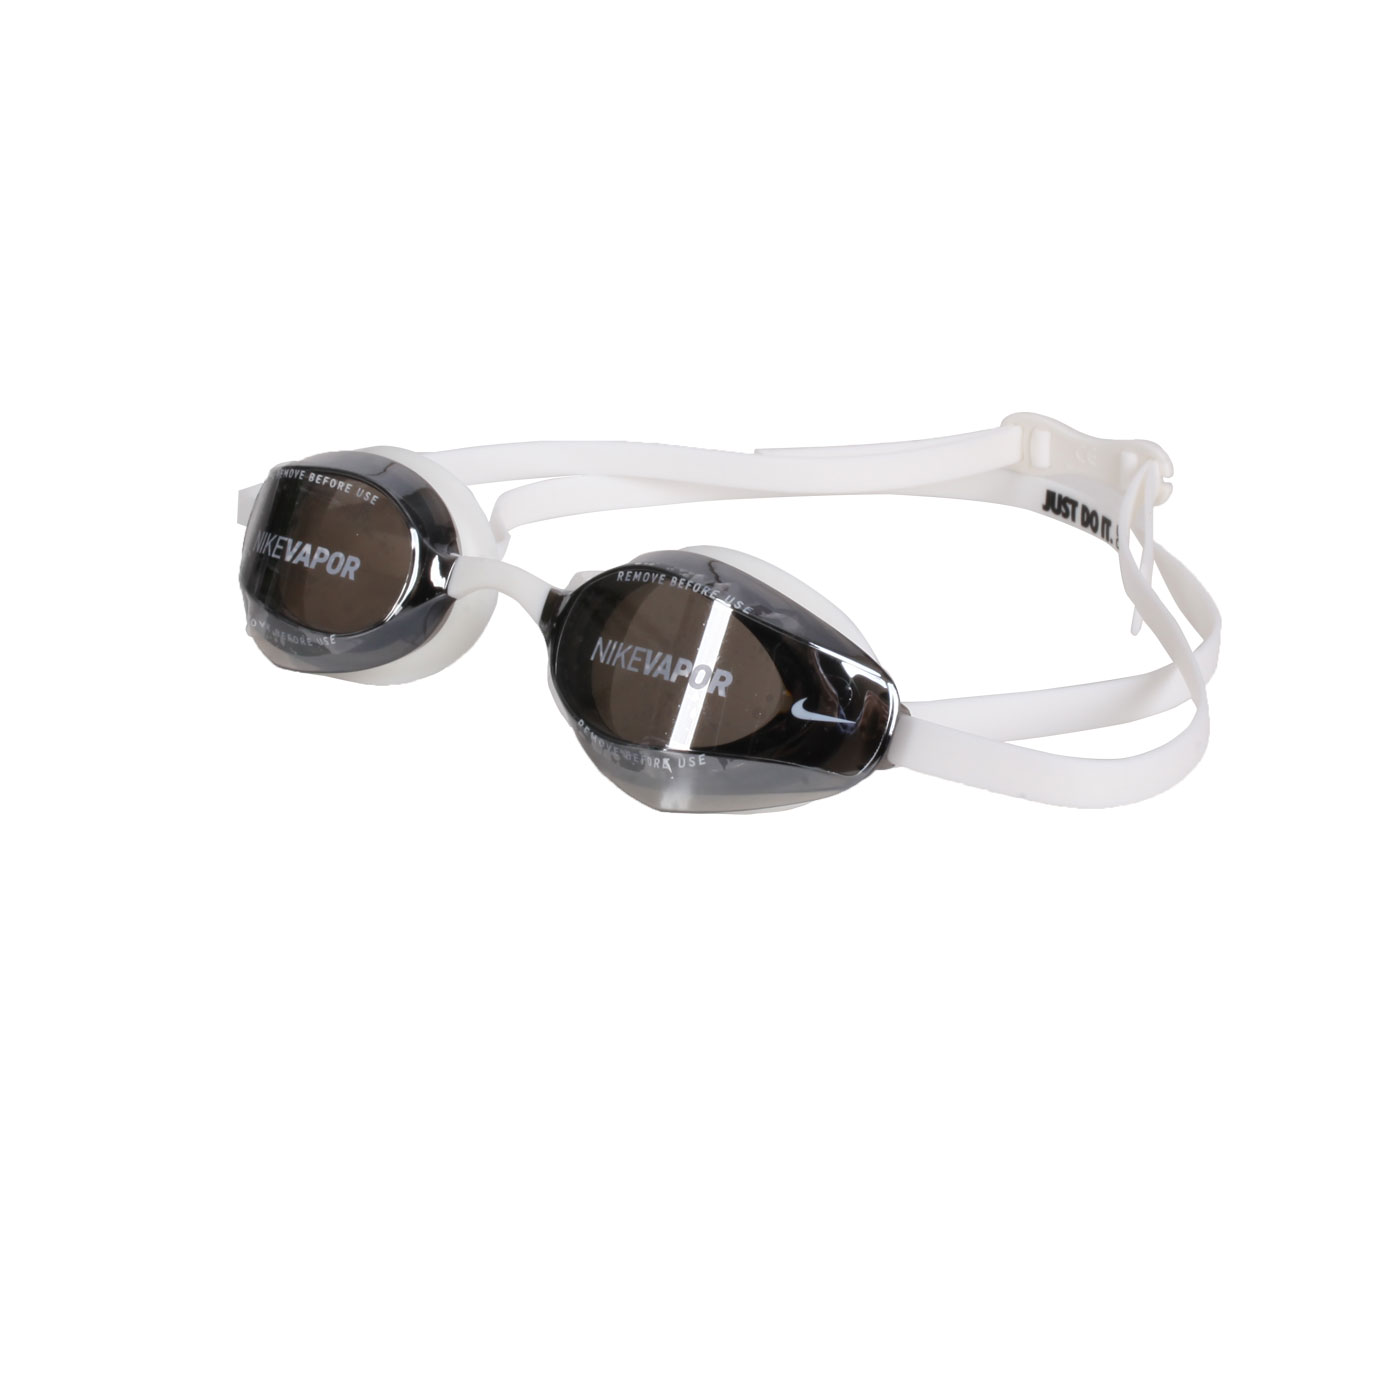 NIKE SWIM VAPOR成人專業型鏡面泳鏡  NESSA176-100 - 白電鍍黑